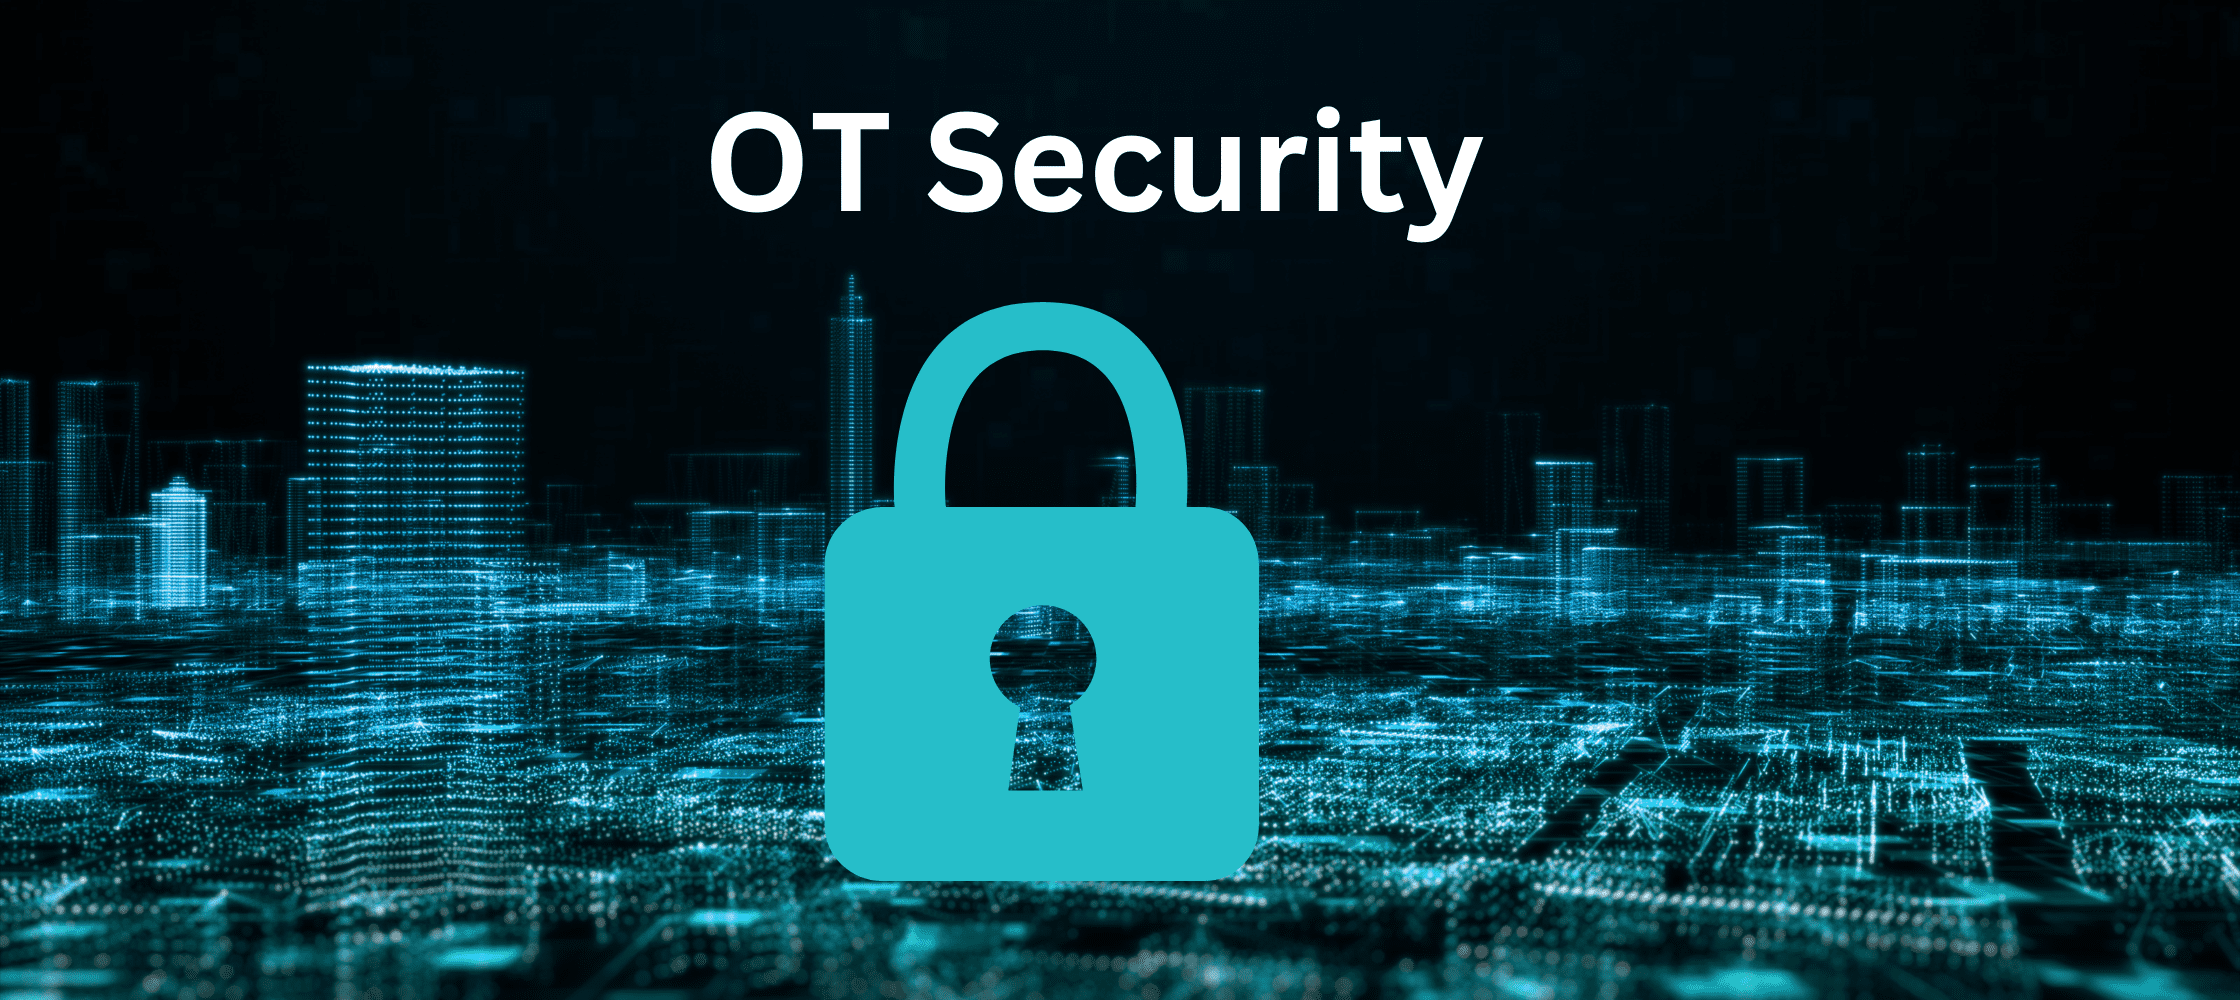 OT security